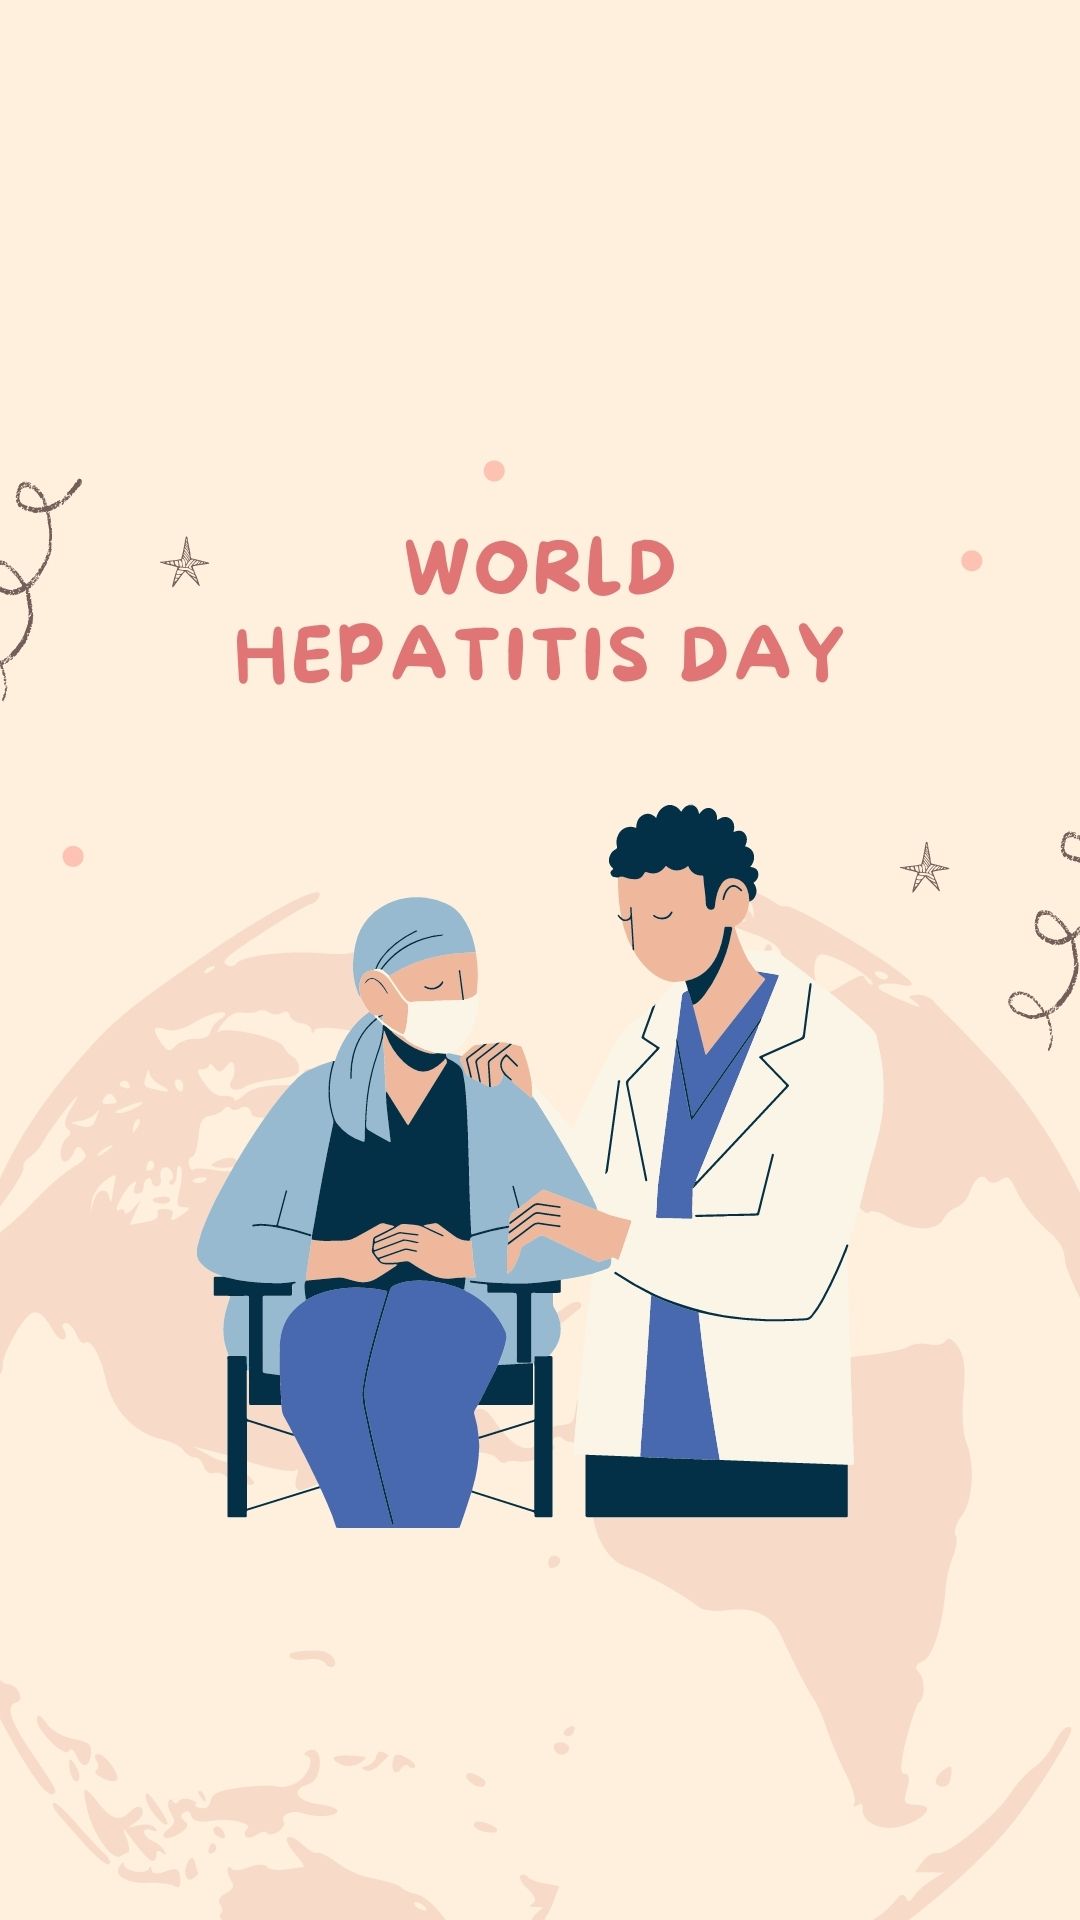 world hepatitis day images for instagram story (6)